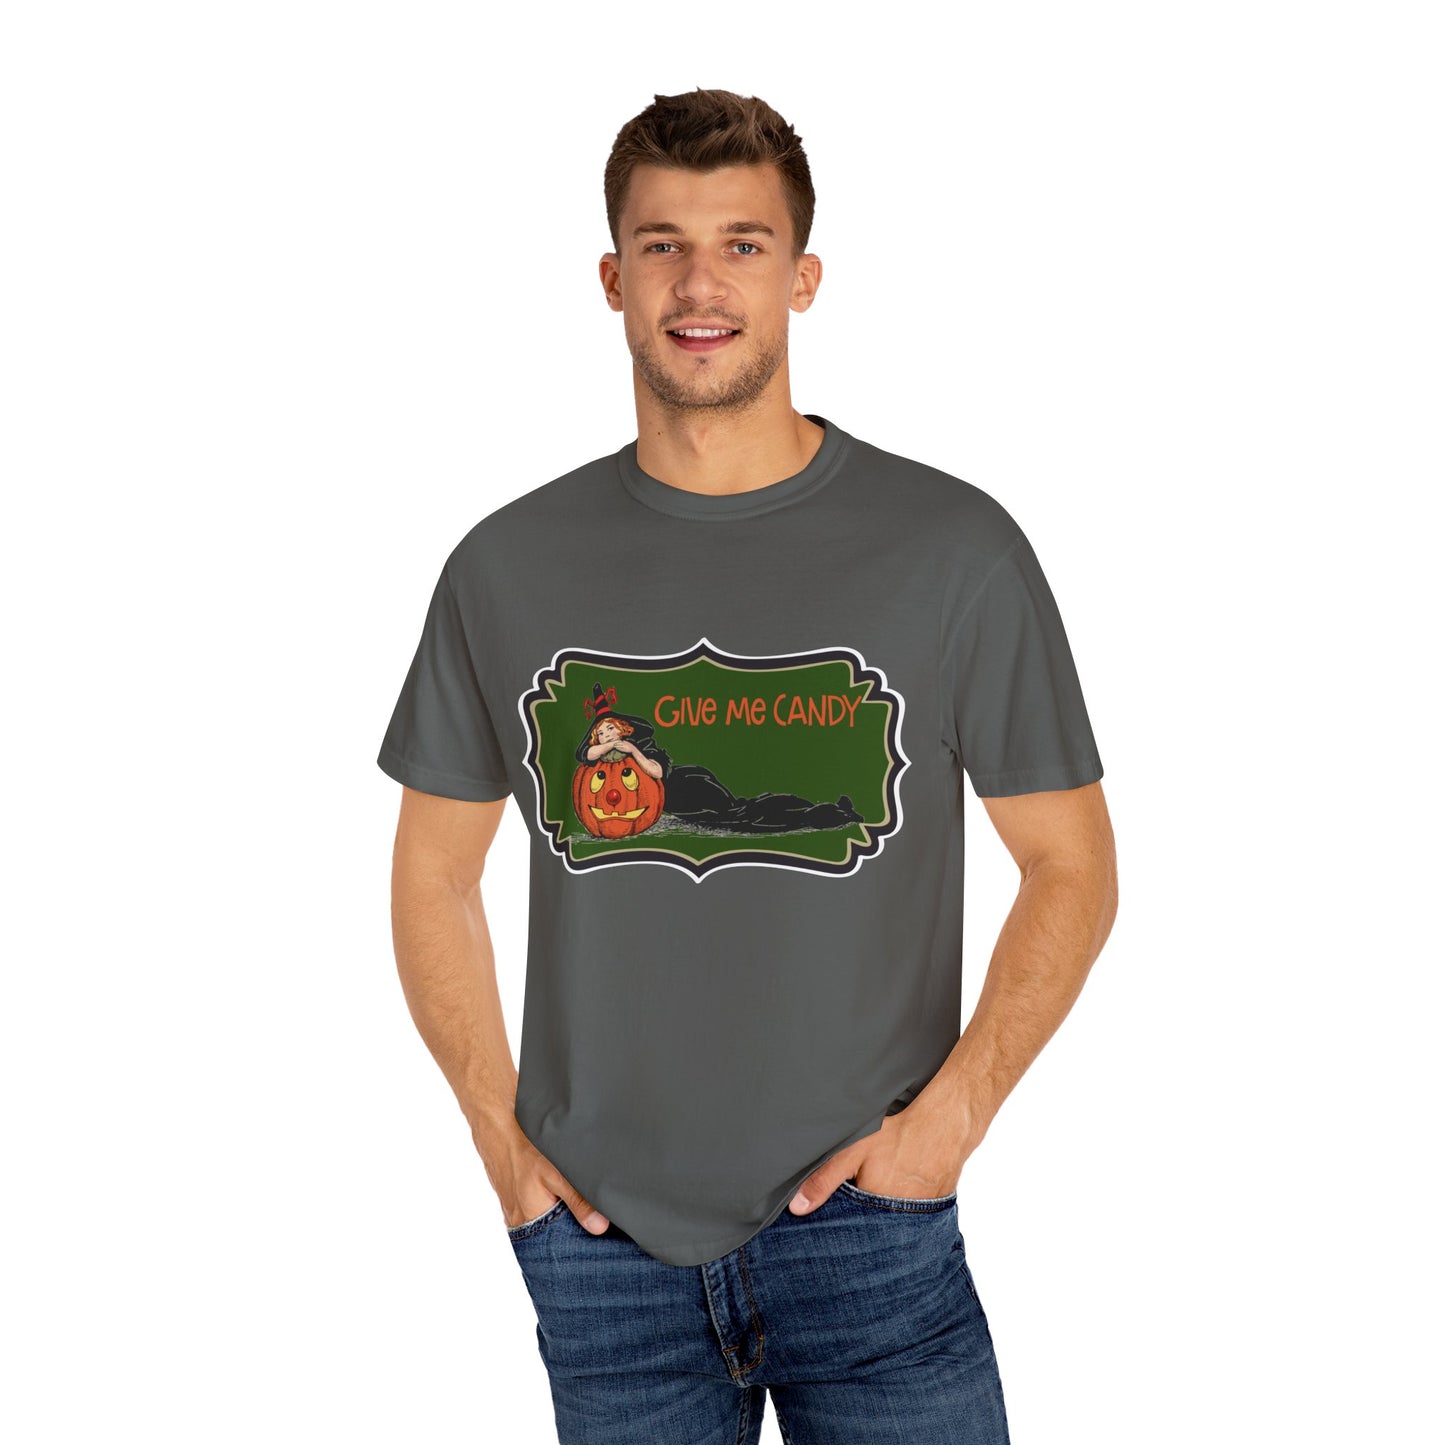 Halloween  Witch Funny Women Shirt | Witch Graphic Print Shirt Tee Top | PumpKin Halloween Tee